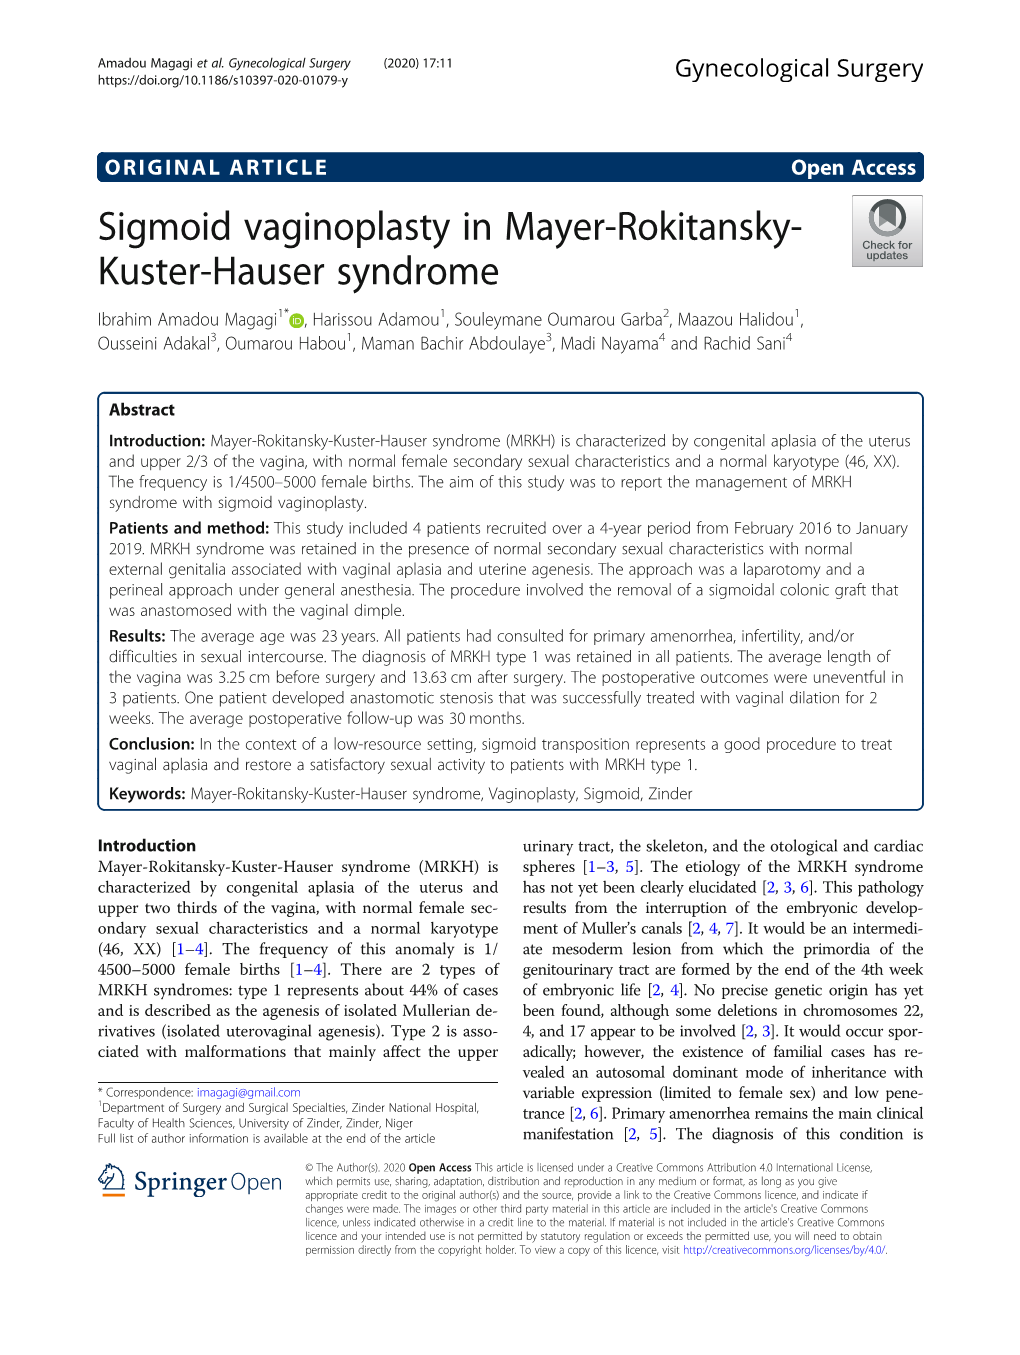 Sigmoid Vaginoplasty in Mayer-Rokitansky-Kuster-Hauser Syndrome